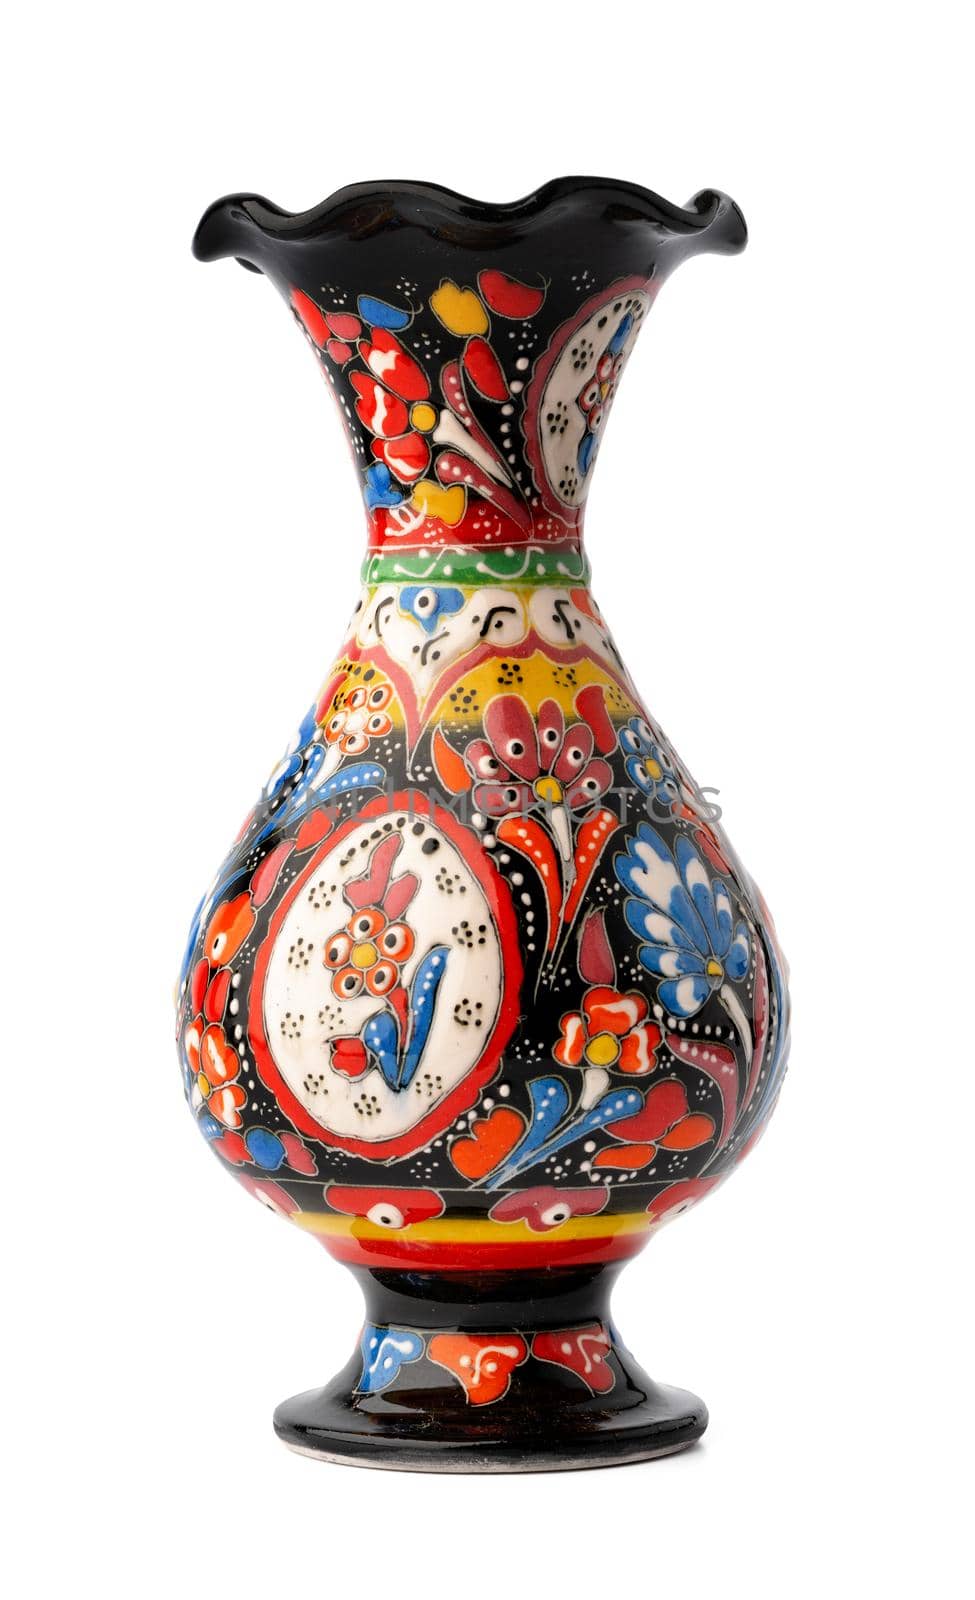 Oriental pottery porcelain vase on white background by Fabrikasimf